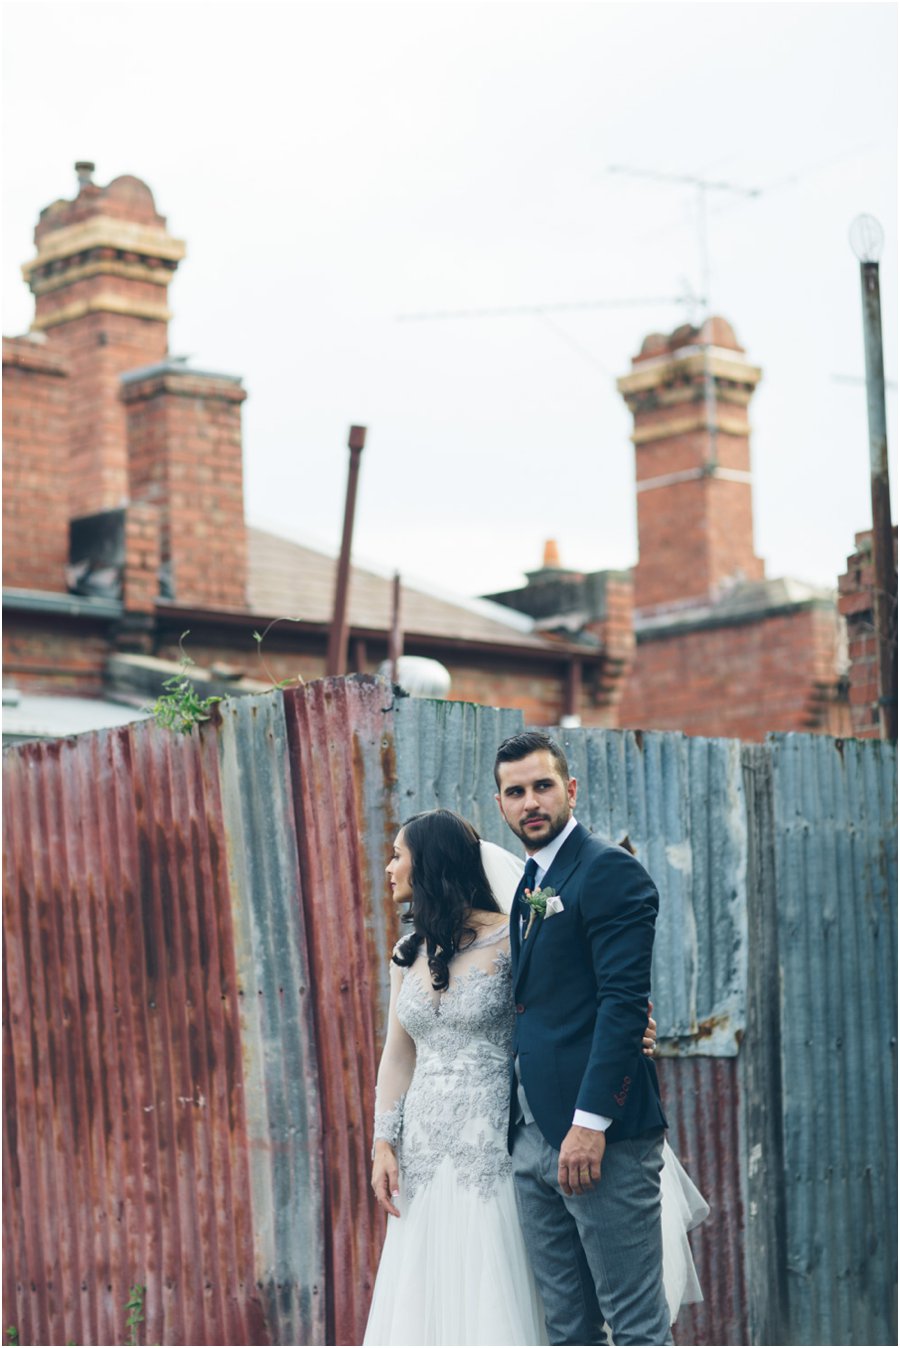 LJM Photography Documentary Melbourne Wedding Photographer urban_086